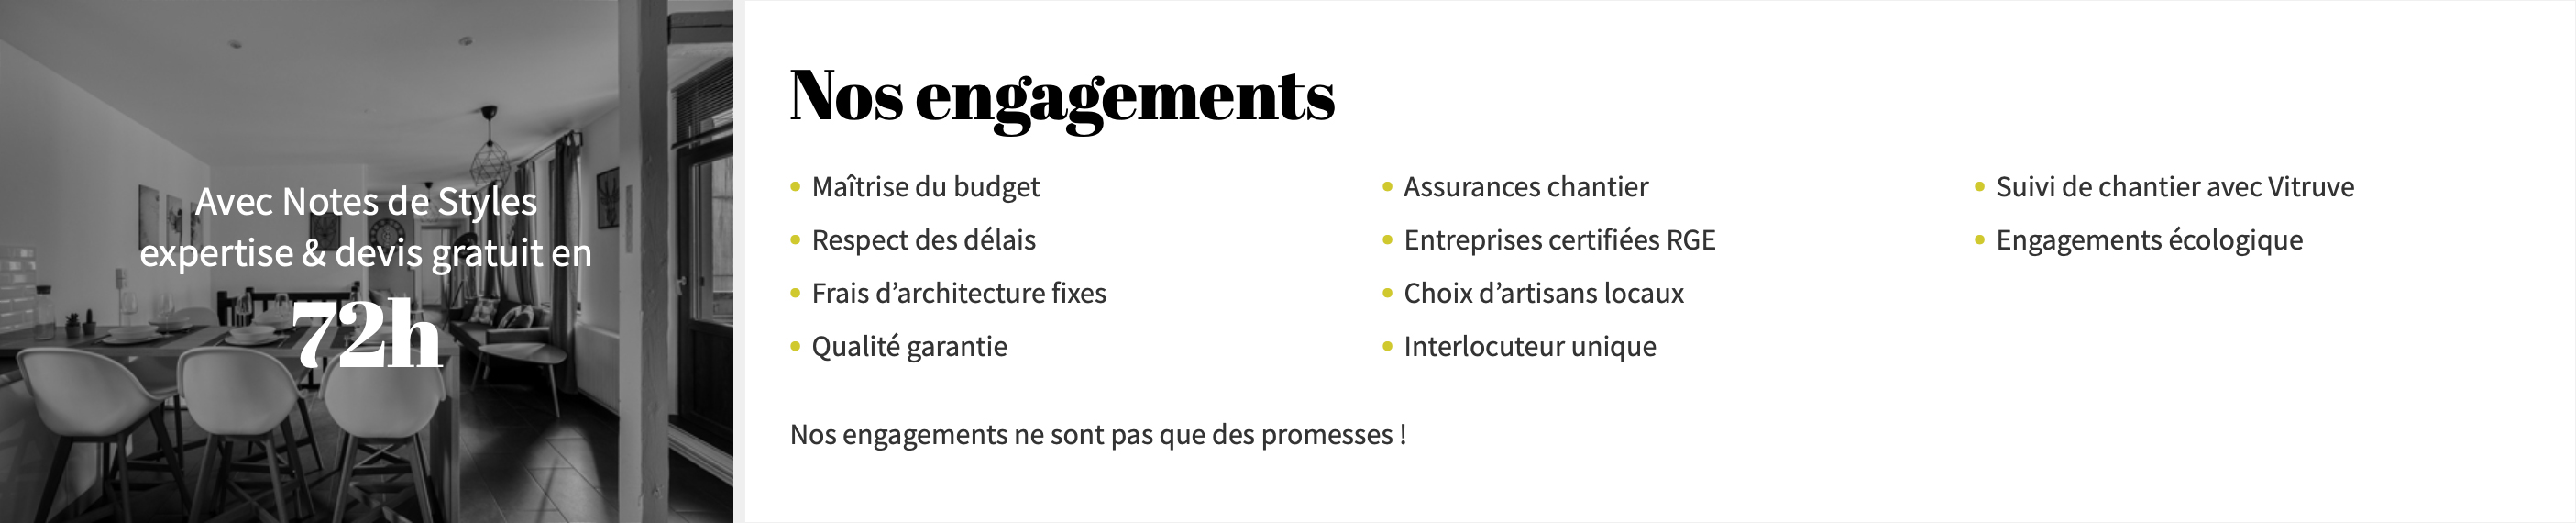 Notes de Styles Montpellier - Nos engagements